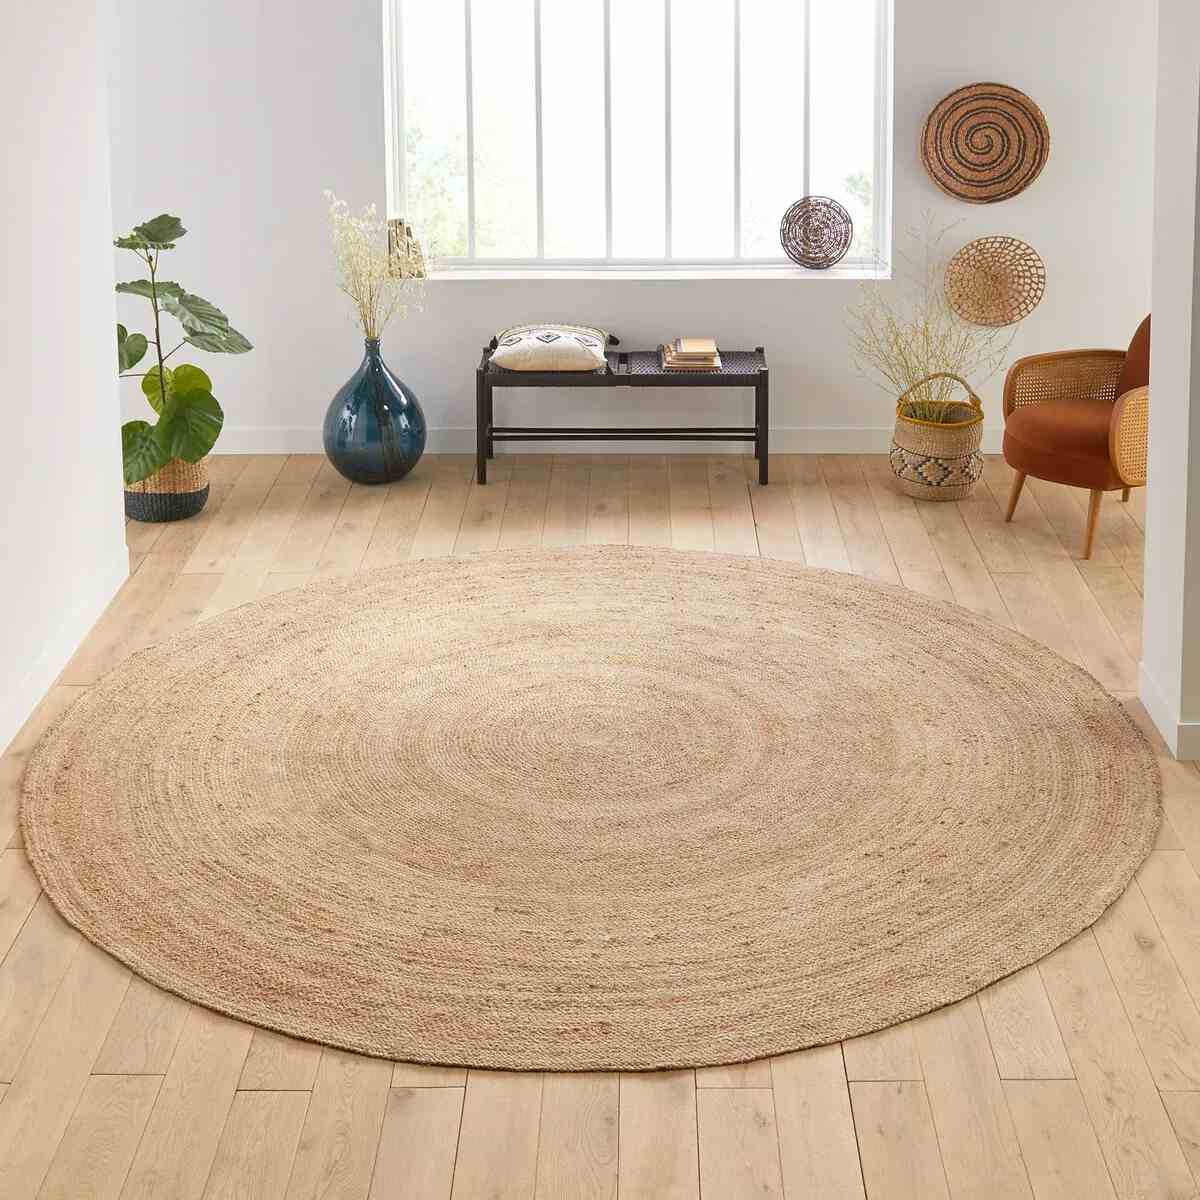 Round brown rug